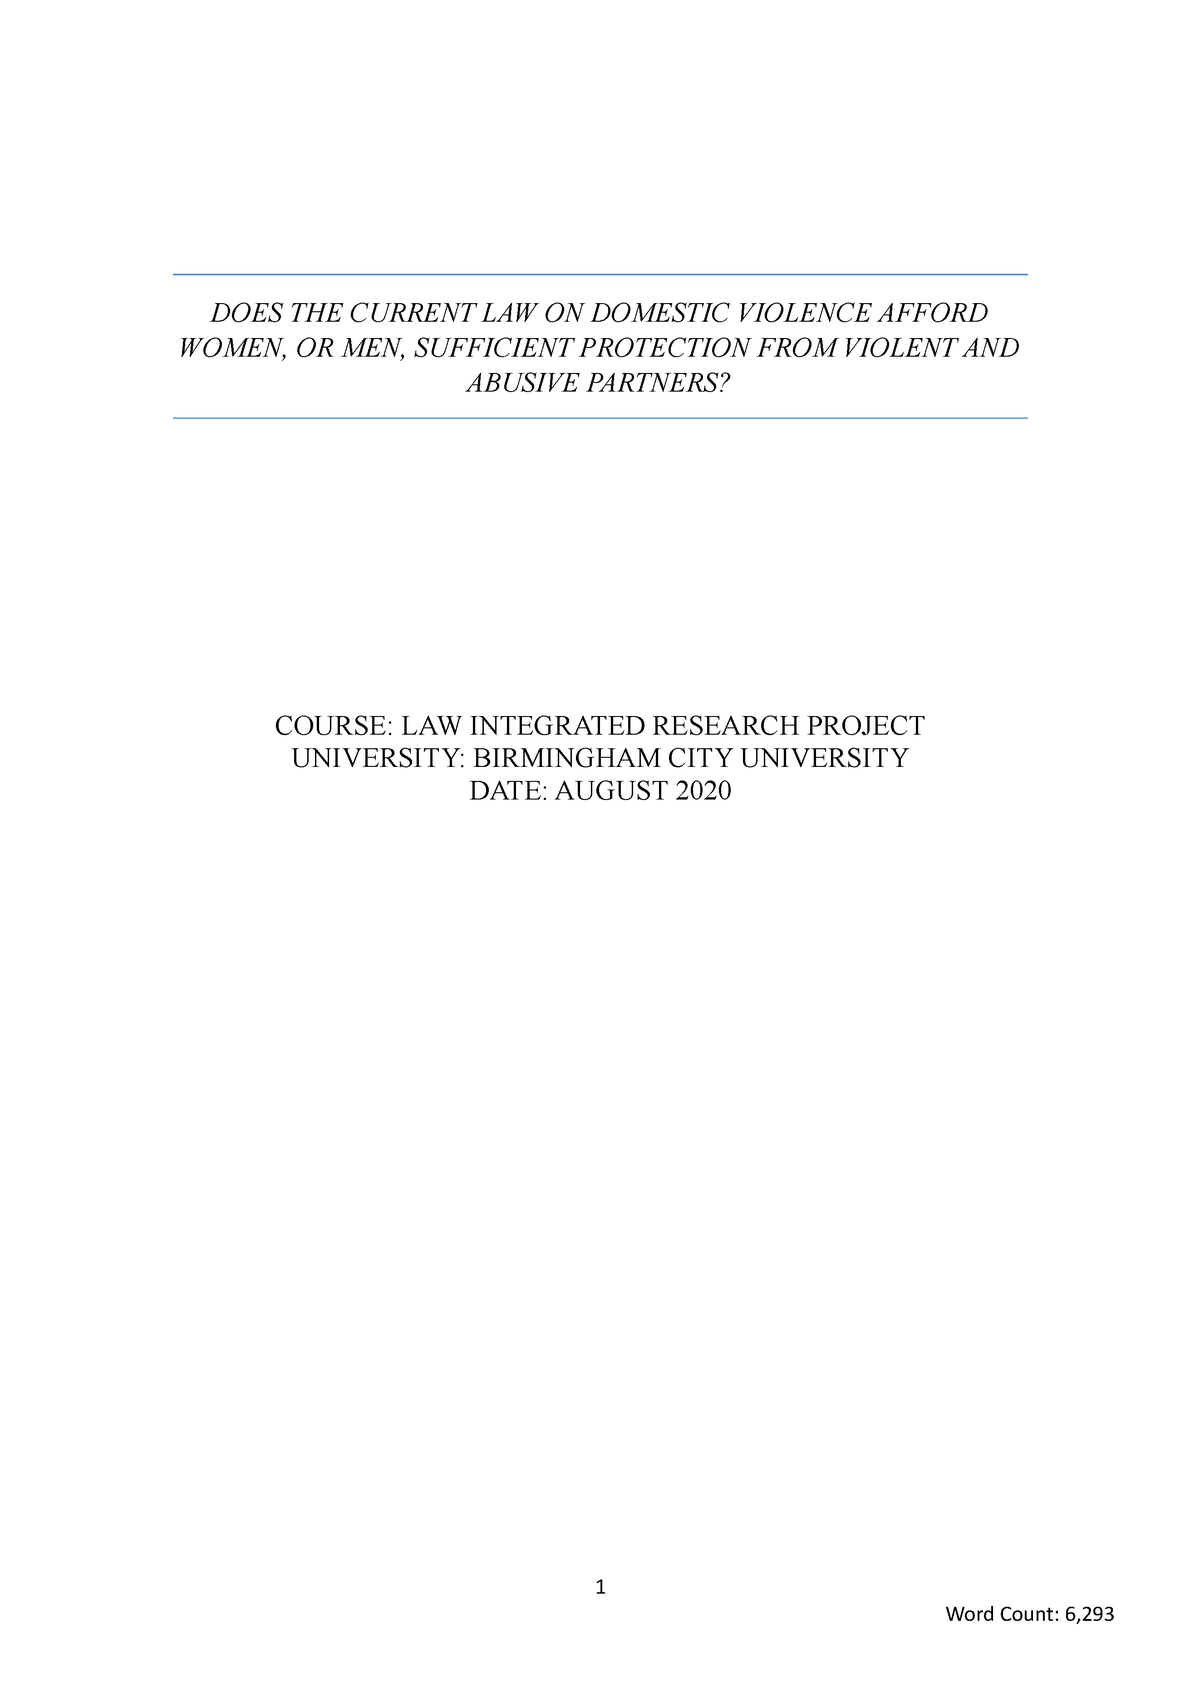 criminology dissertation pdf